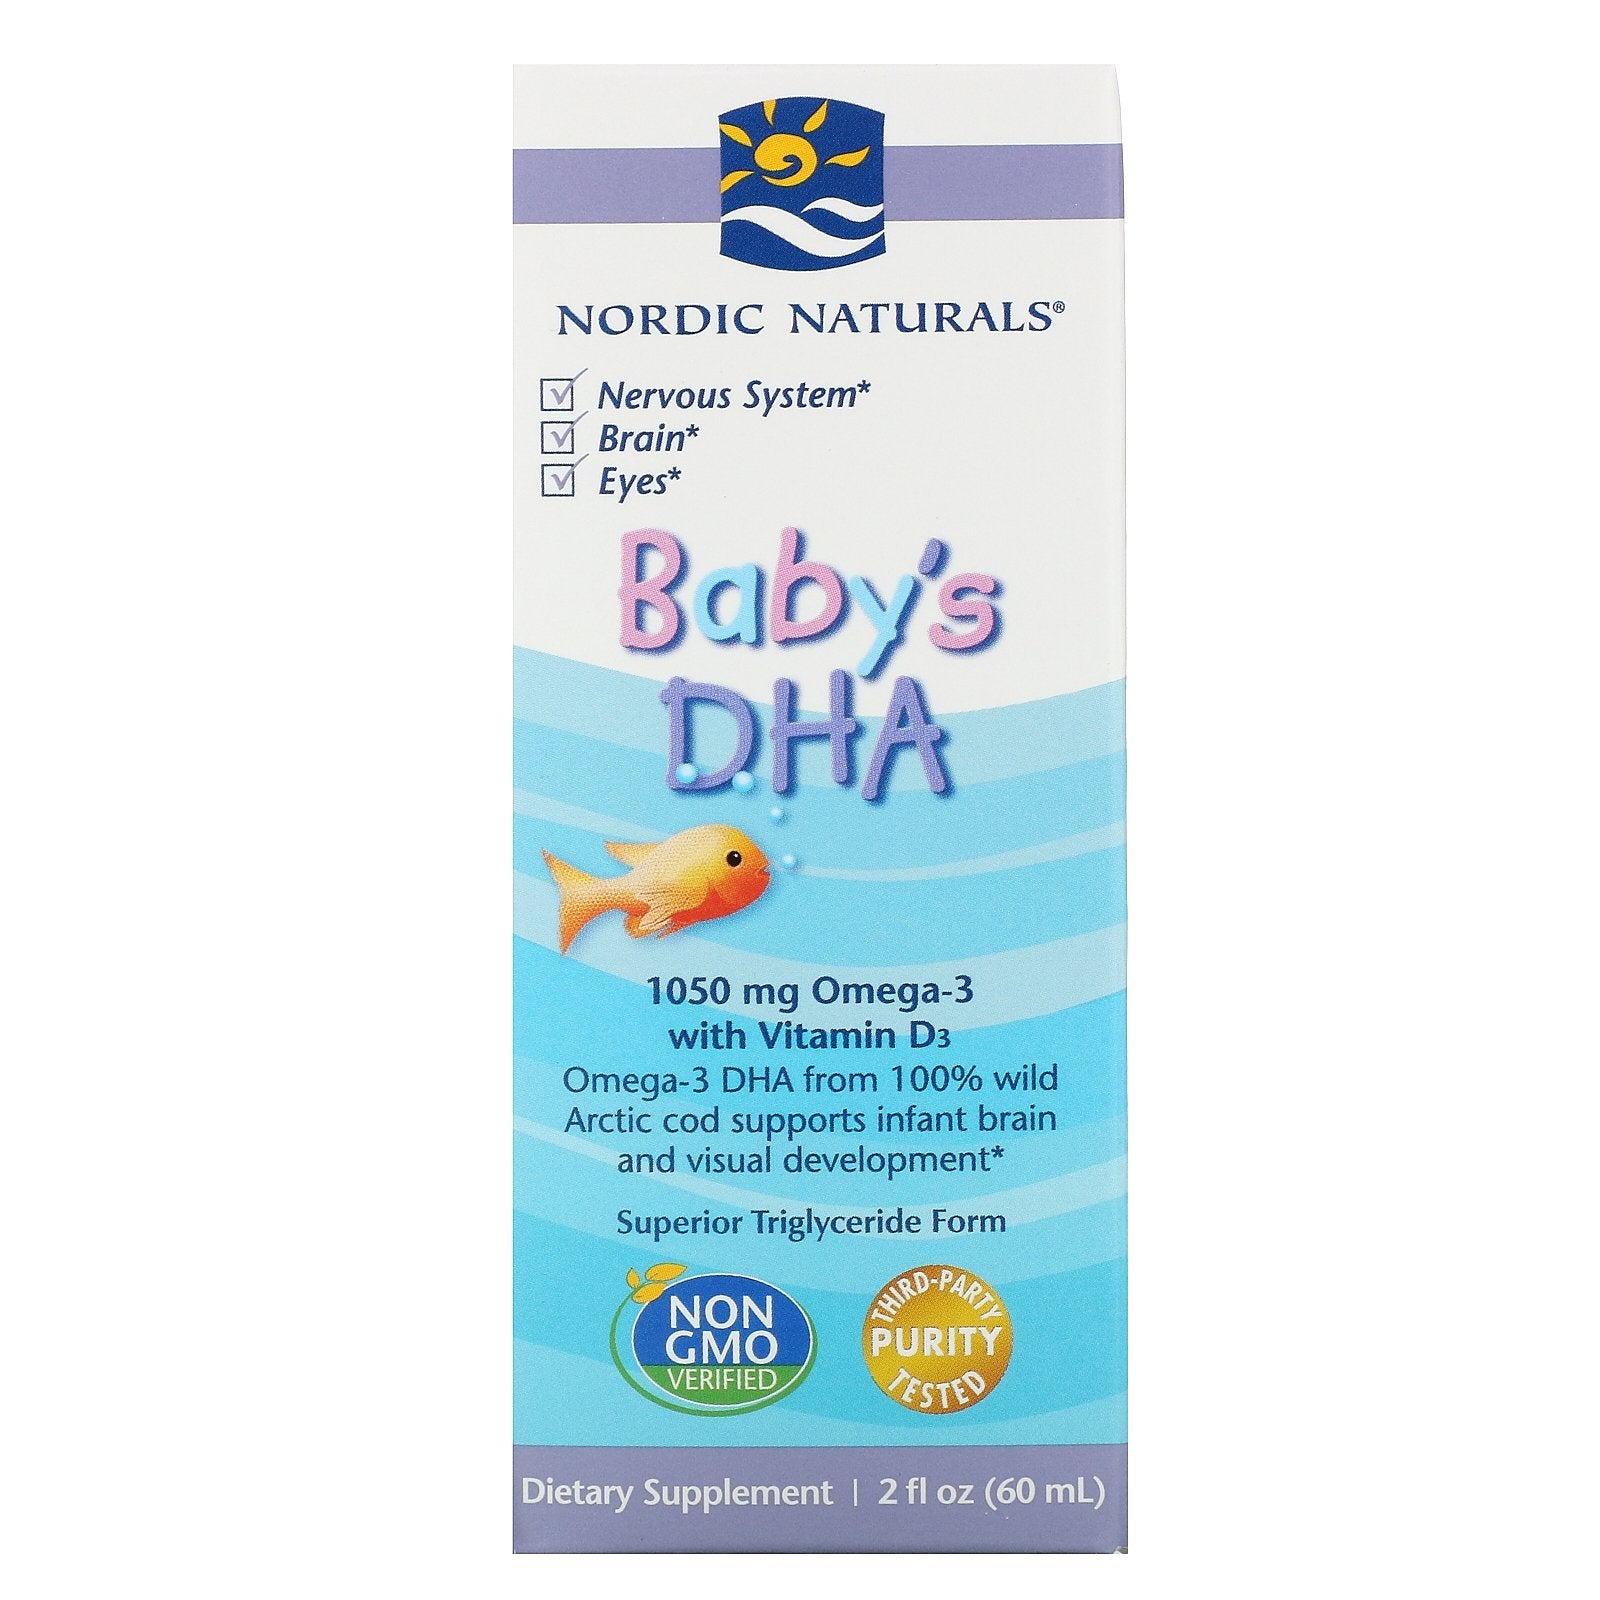 Nordic Naturals Baby's DHA, 60 ml.